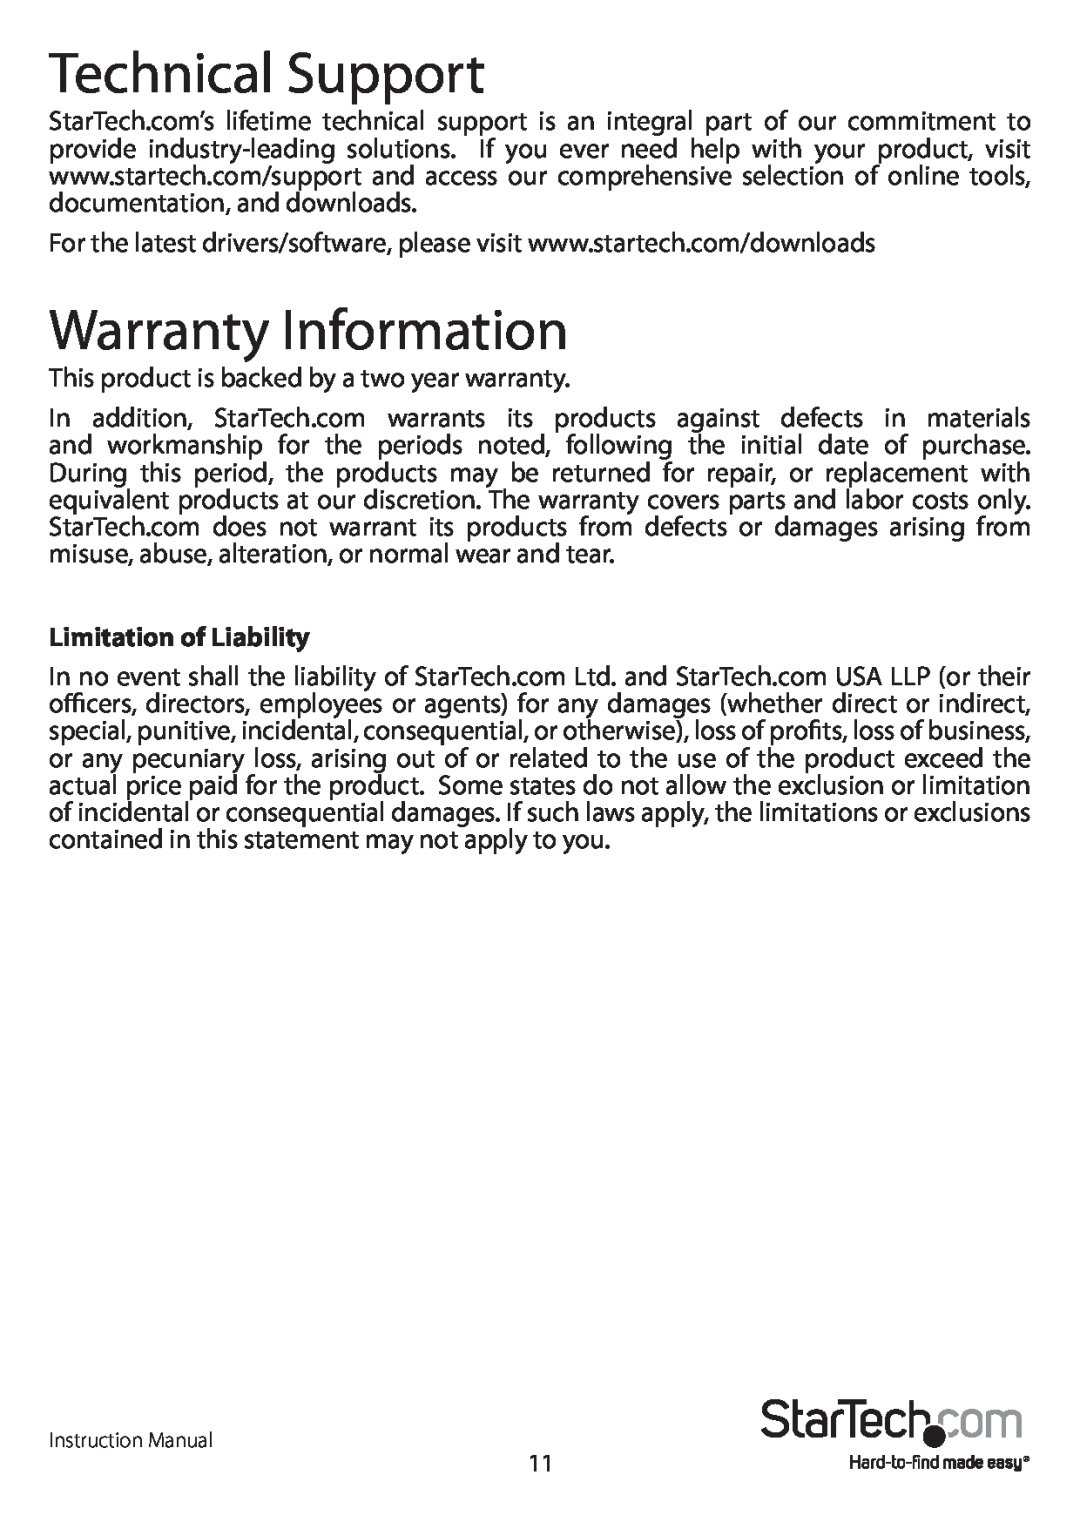 StarTech.com SV565USAGB, SV565UTPUSA manual Technical Support, Warranty Information, Limitation of Liability 